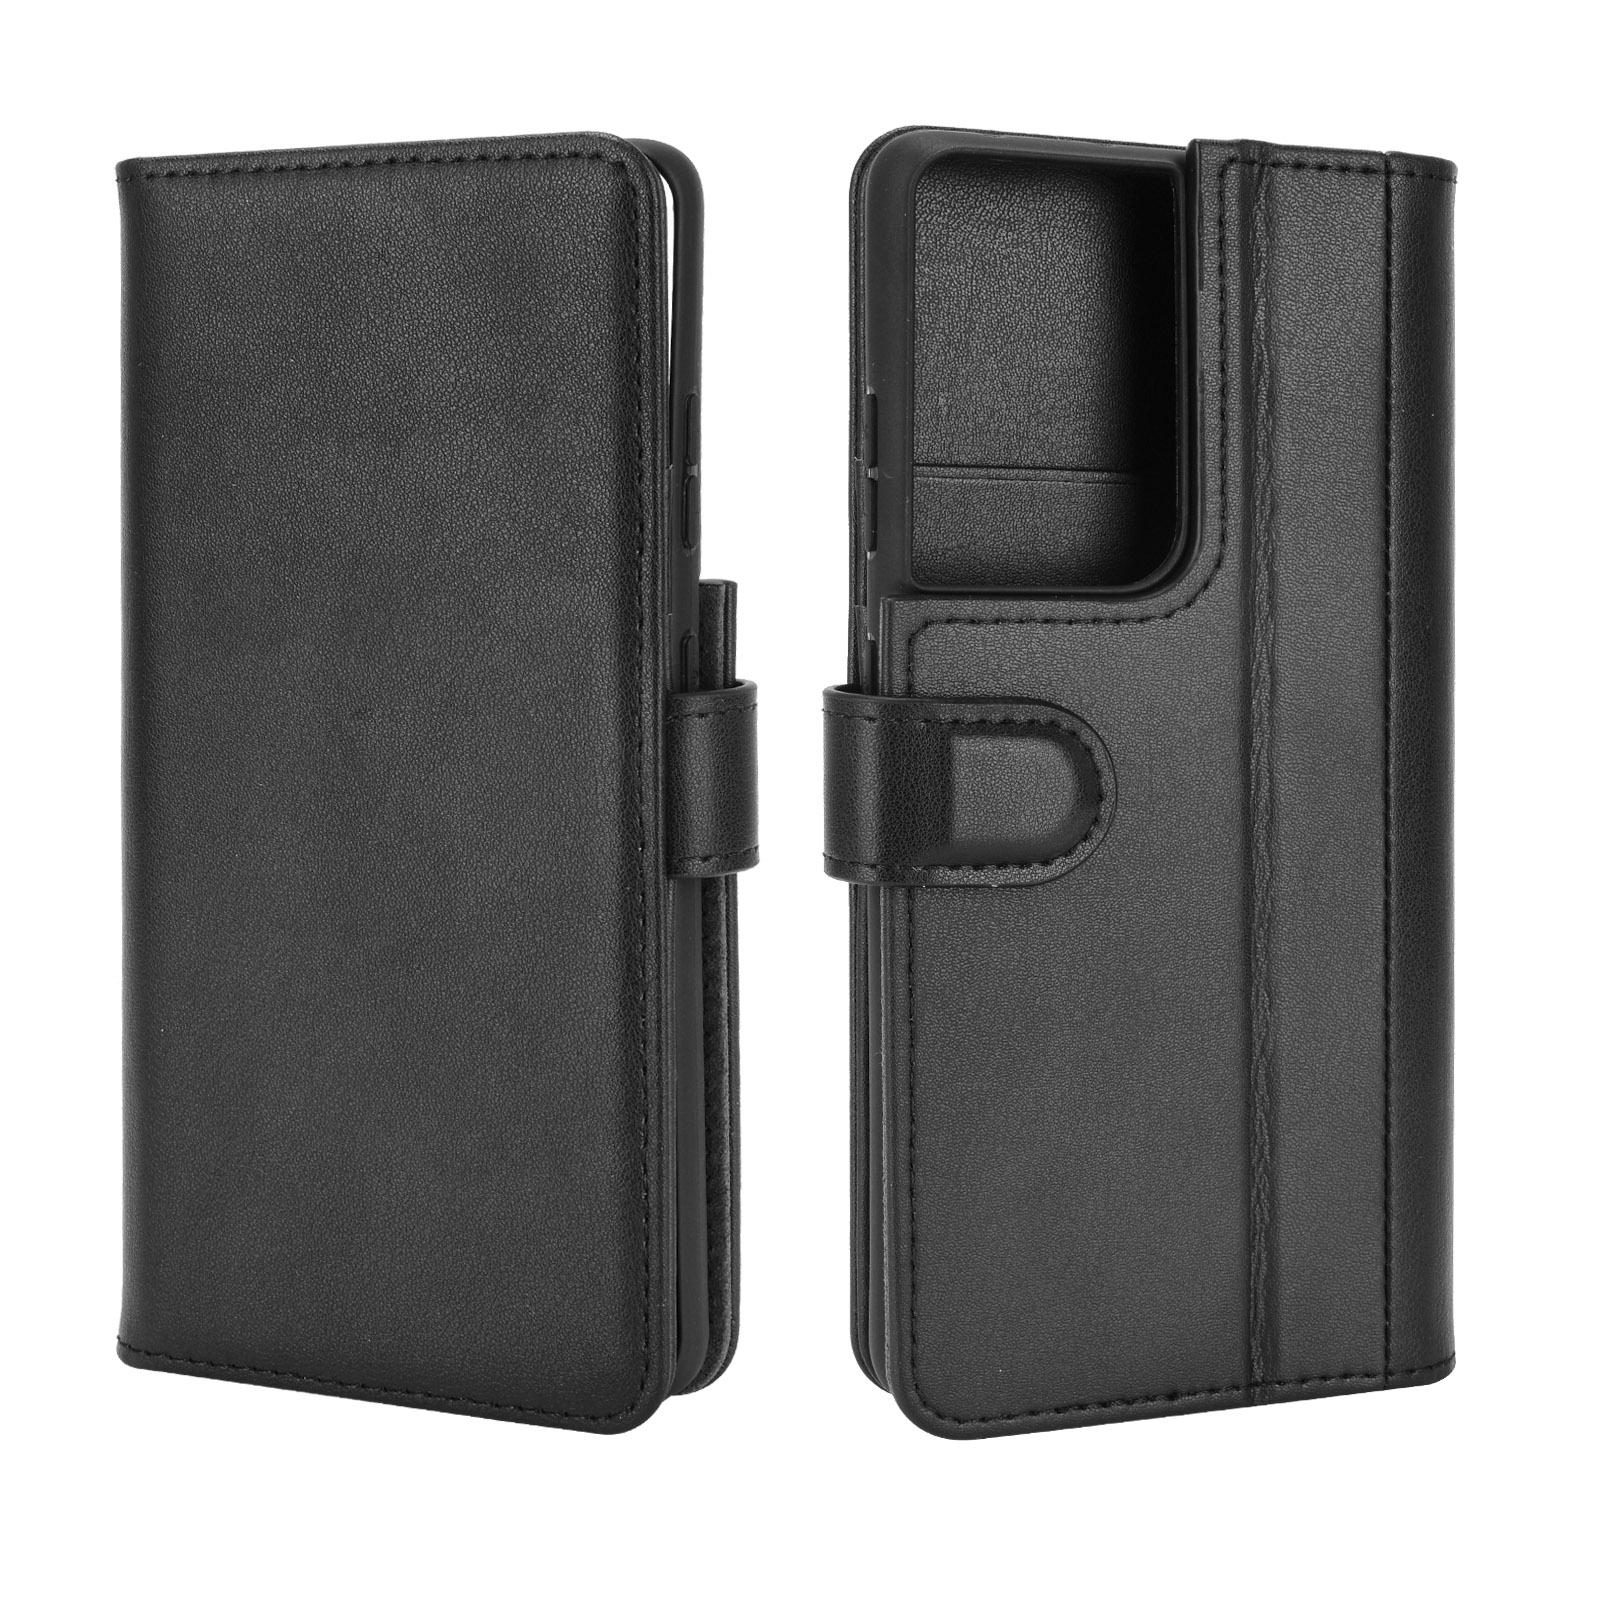 Samsung Galaxy S21 Ultra Genuine Leather Wallet Case Black